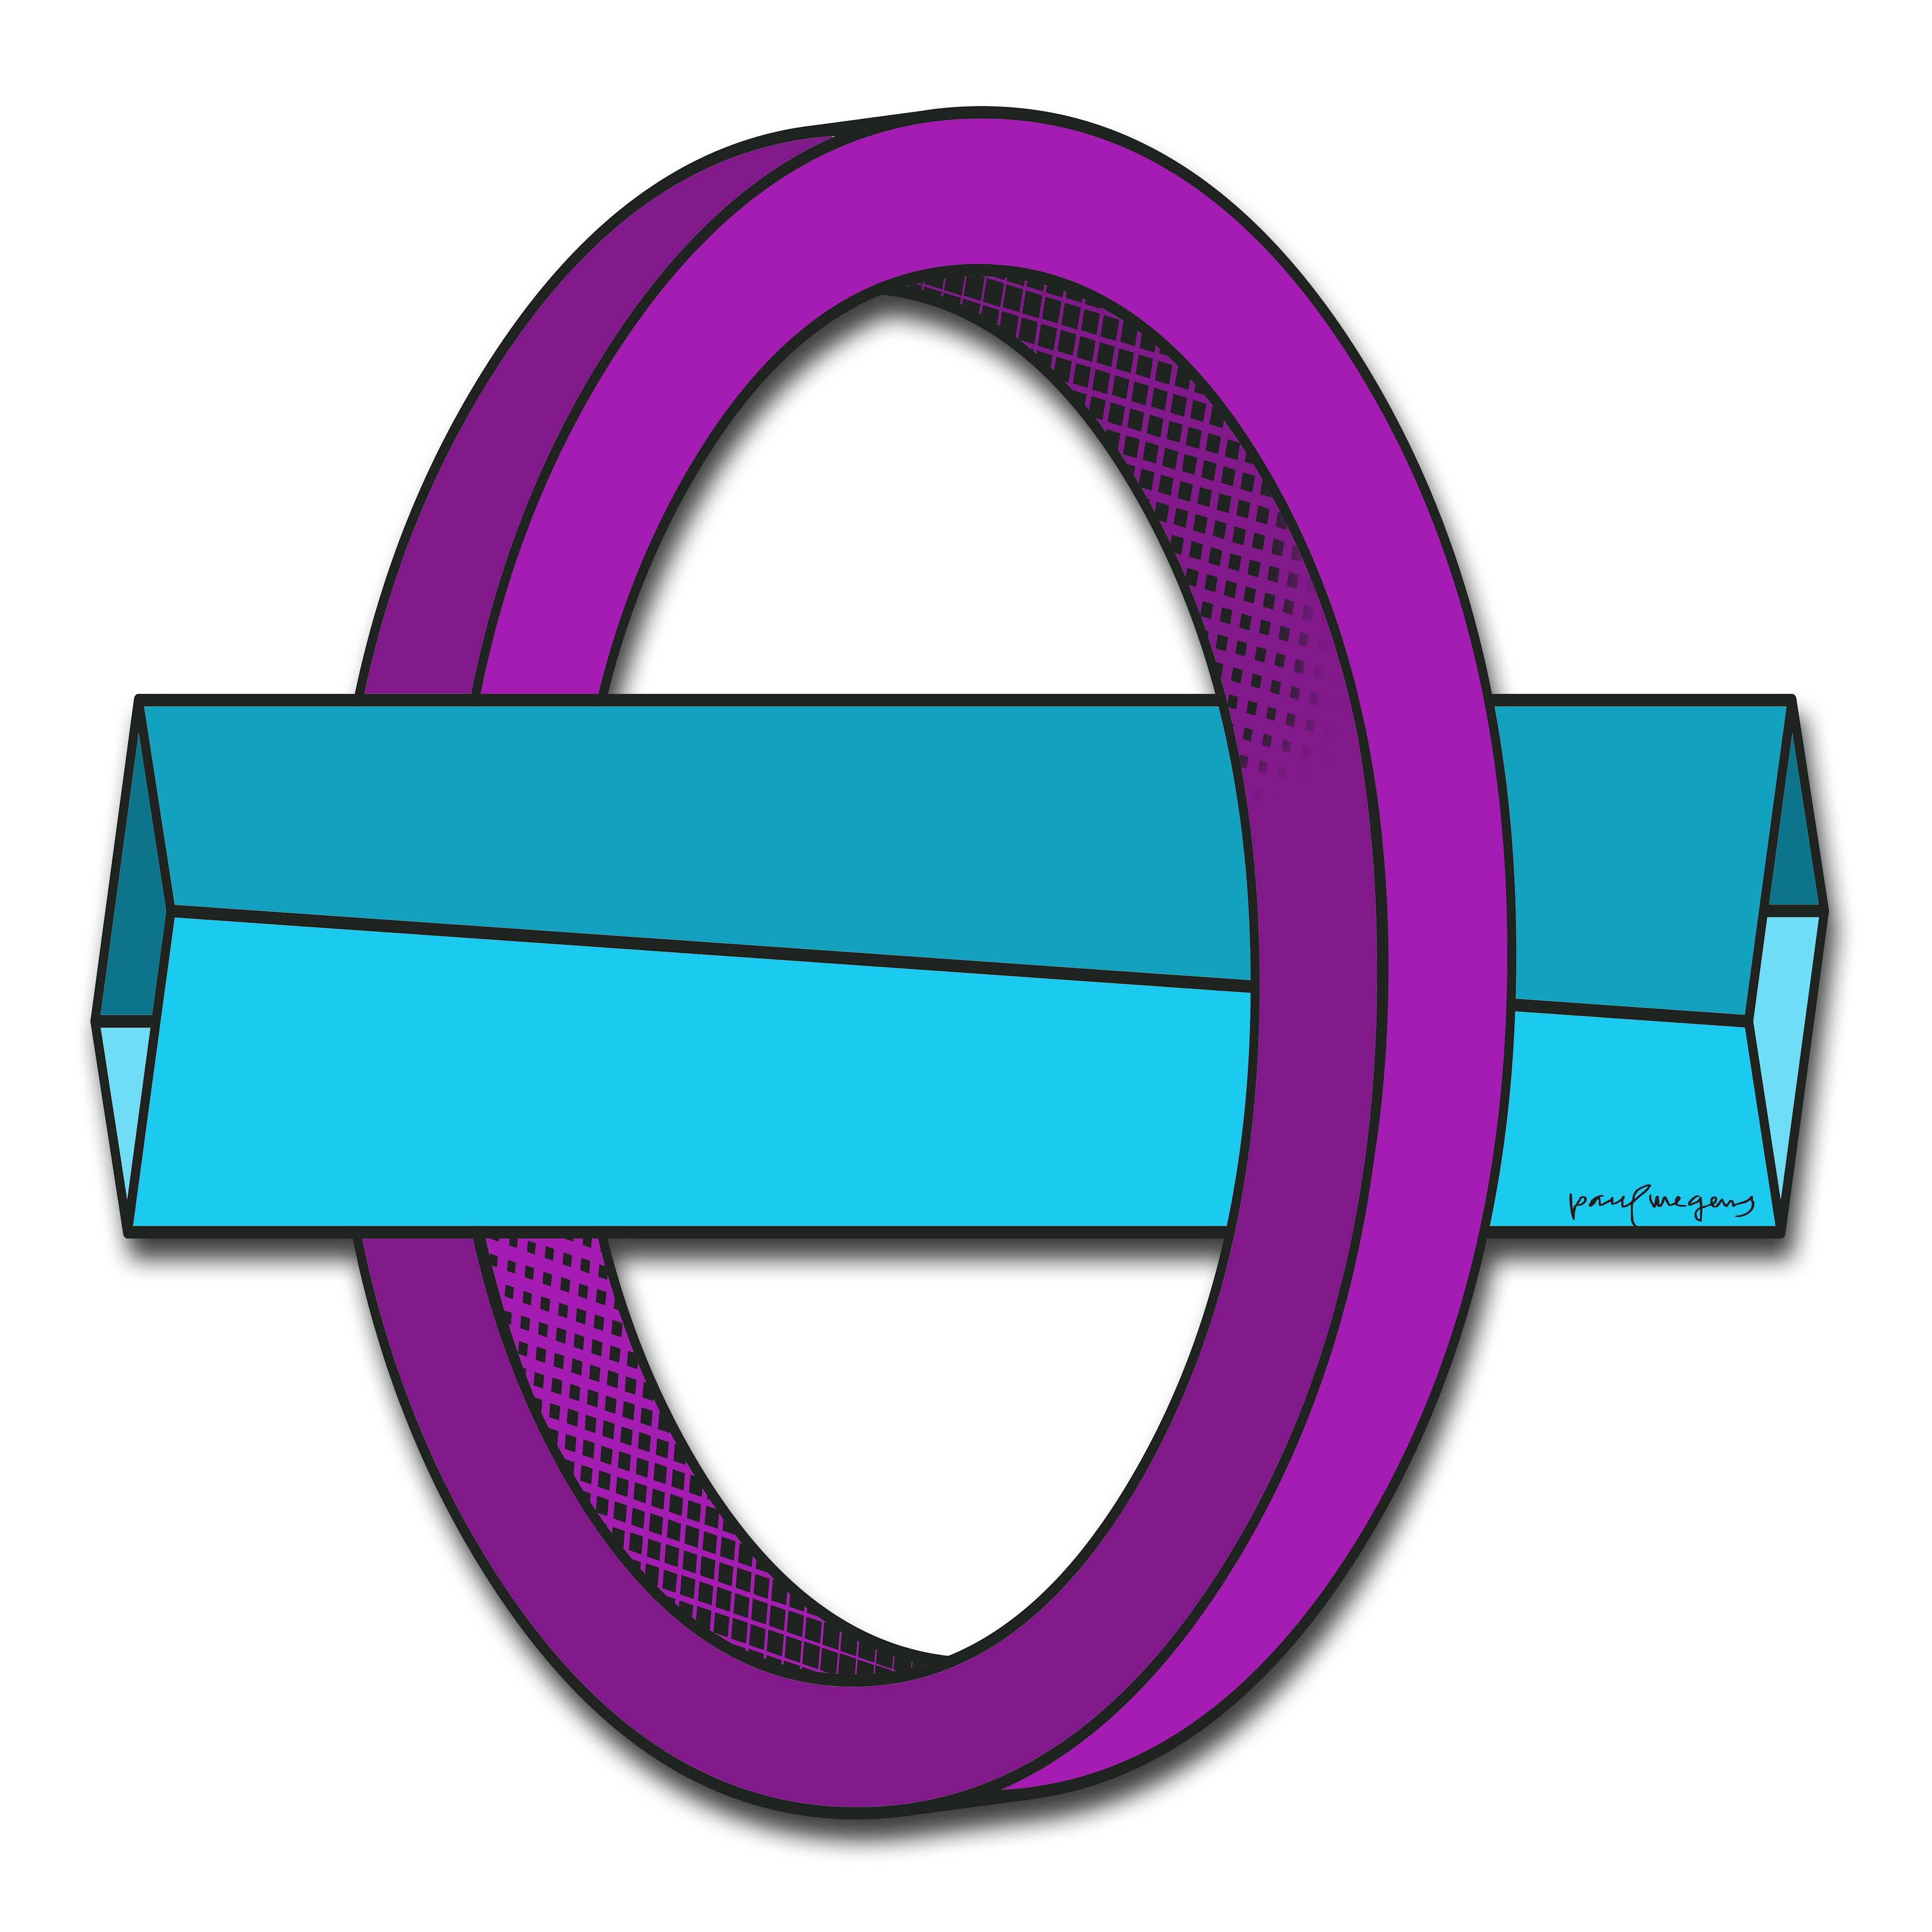 'The purple circle'